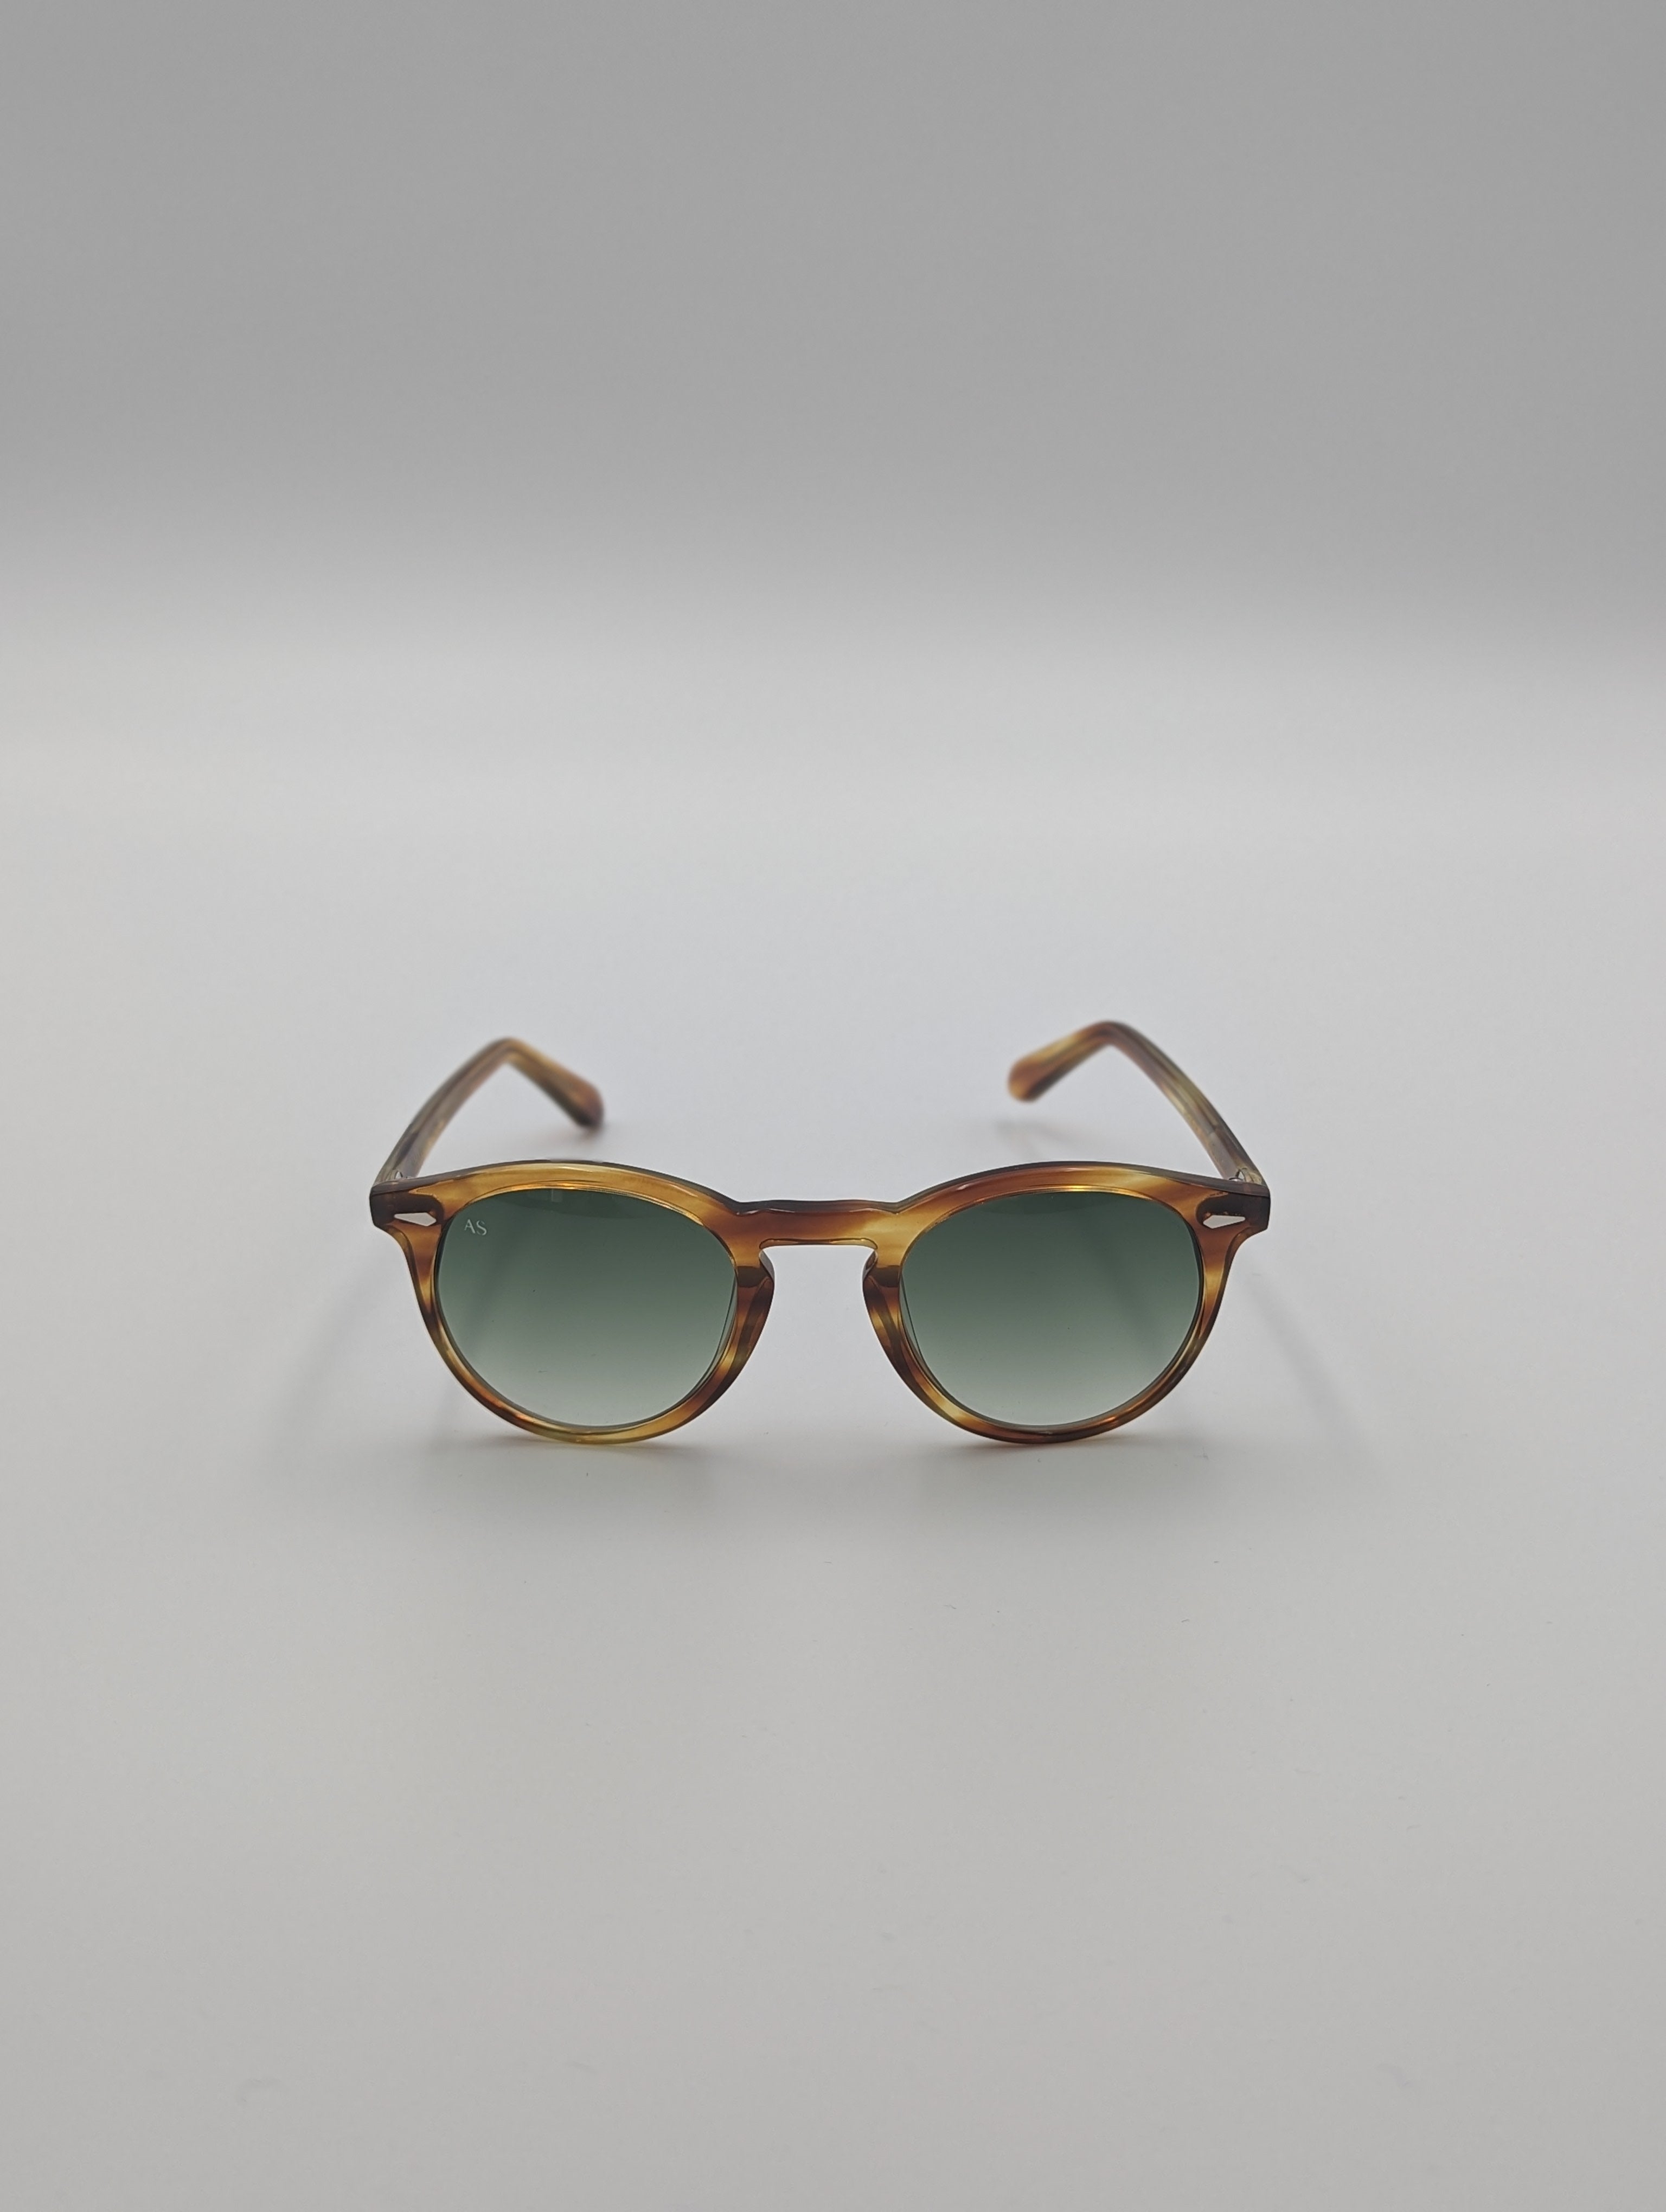 Sunglasses Iconic Tortoiseshell - Caramel